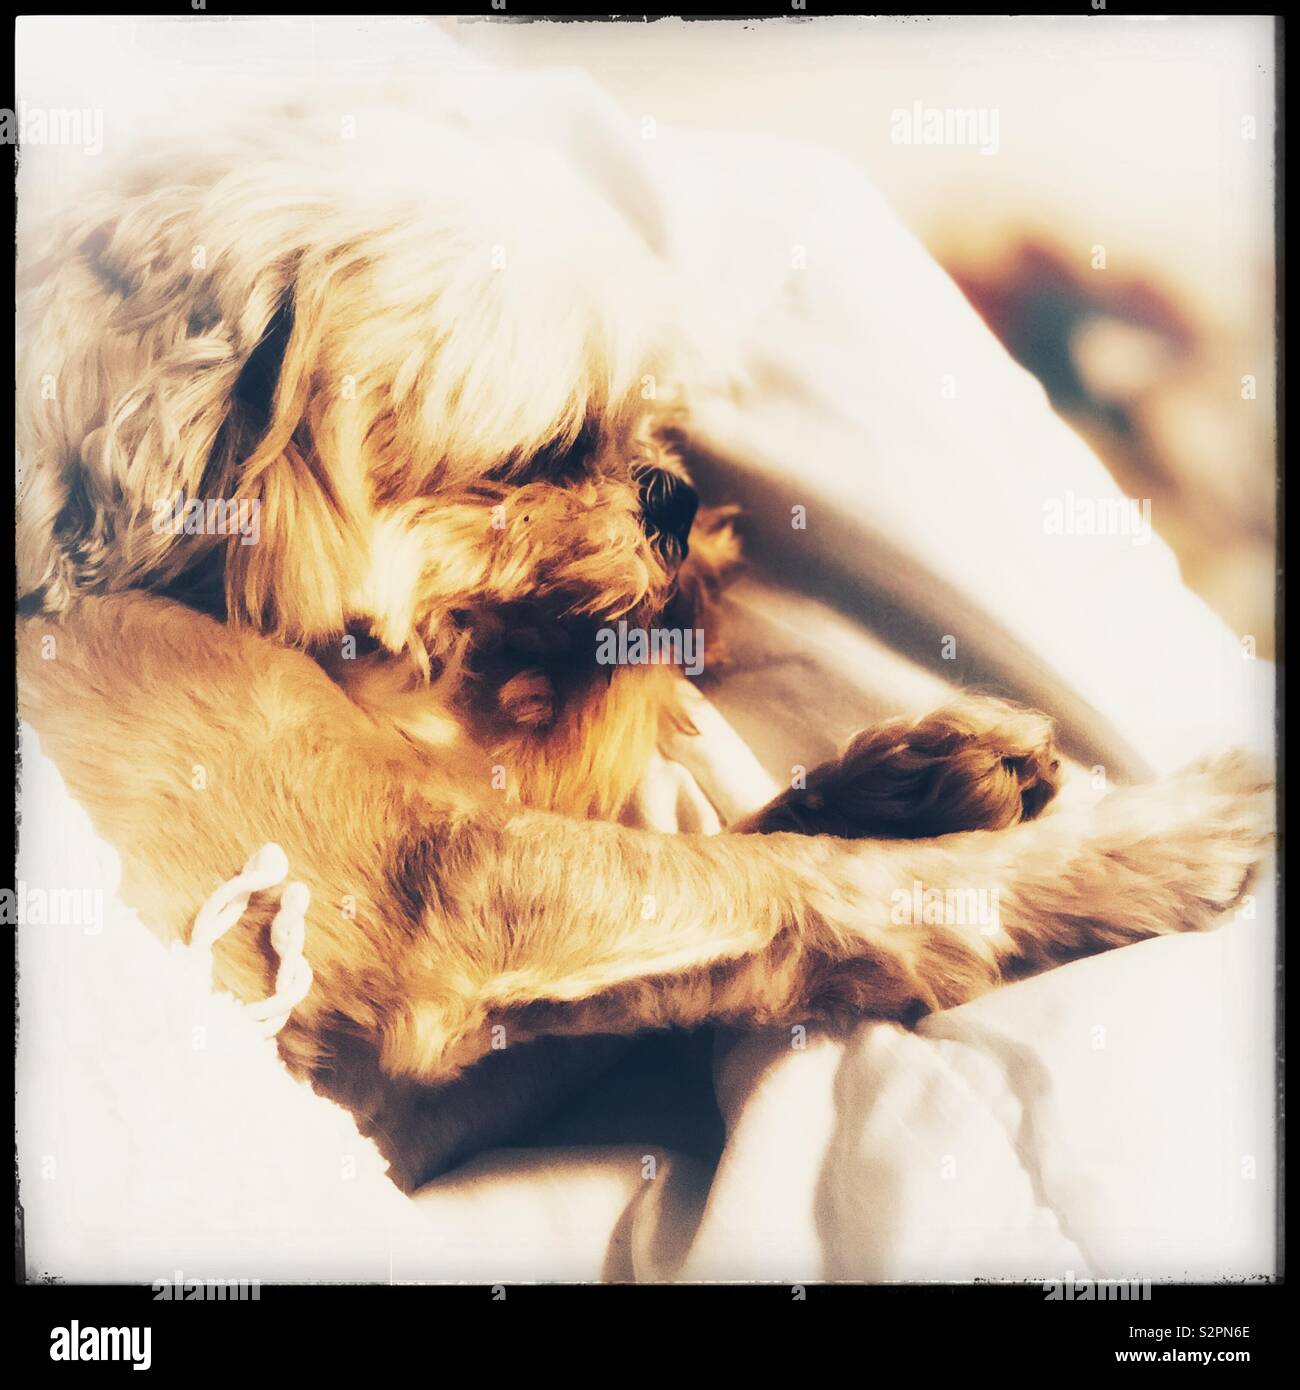 Shitz tzu sleeping, shitz tzu, white dog in bed, sleeping dog lie Stock Photo